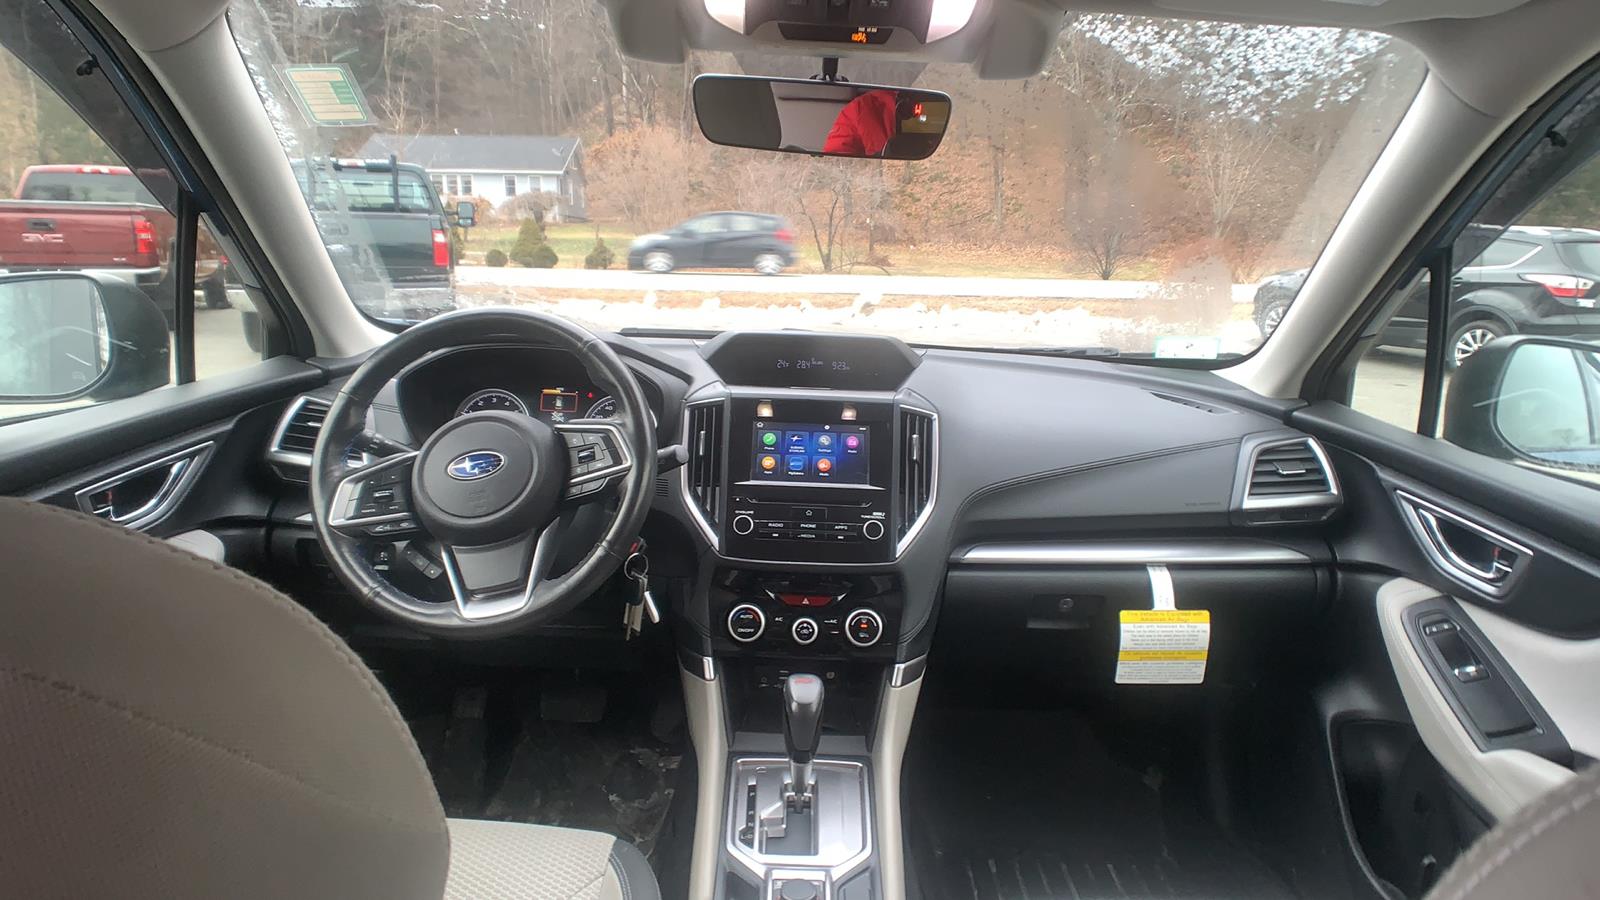 2019 Subaru Forester Sport Utility